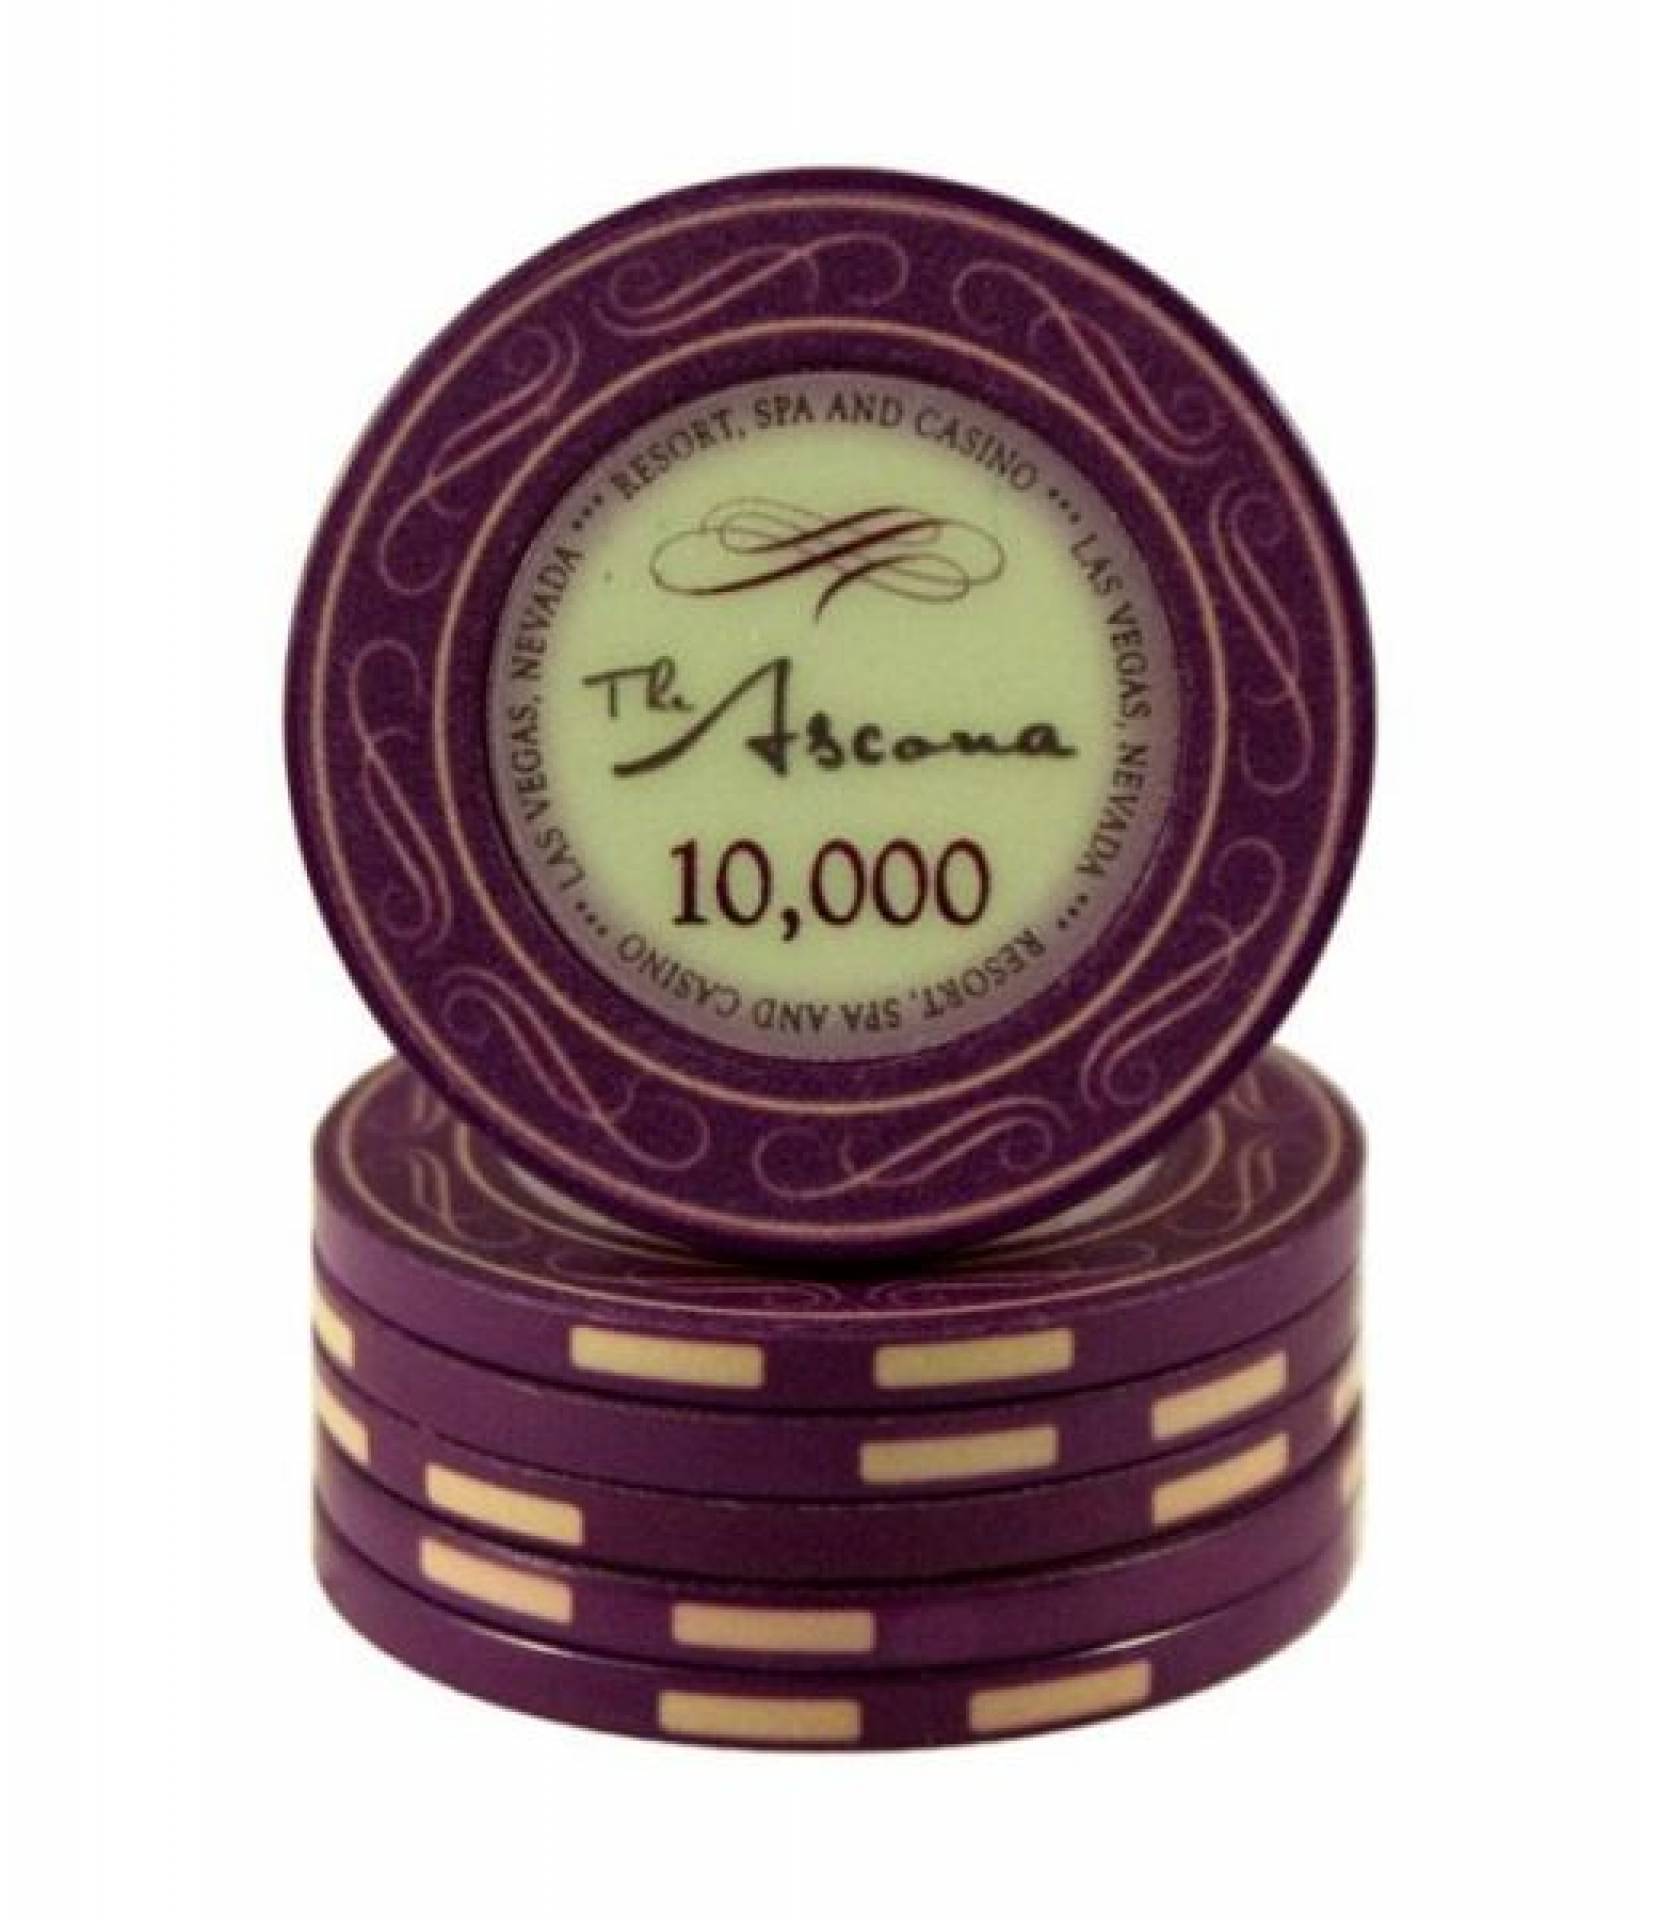 Poker chip The Ascona - hodnota 10.000